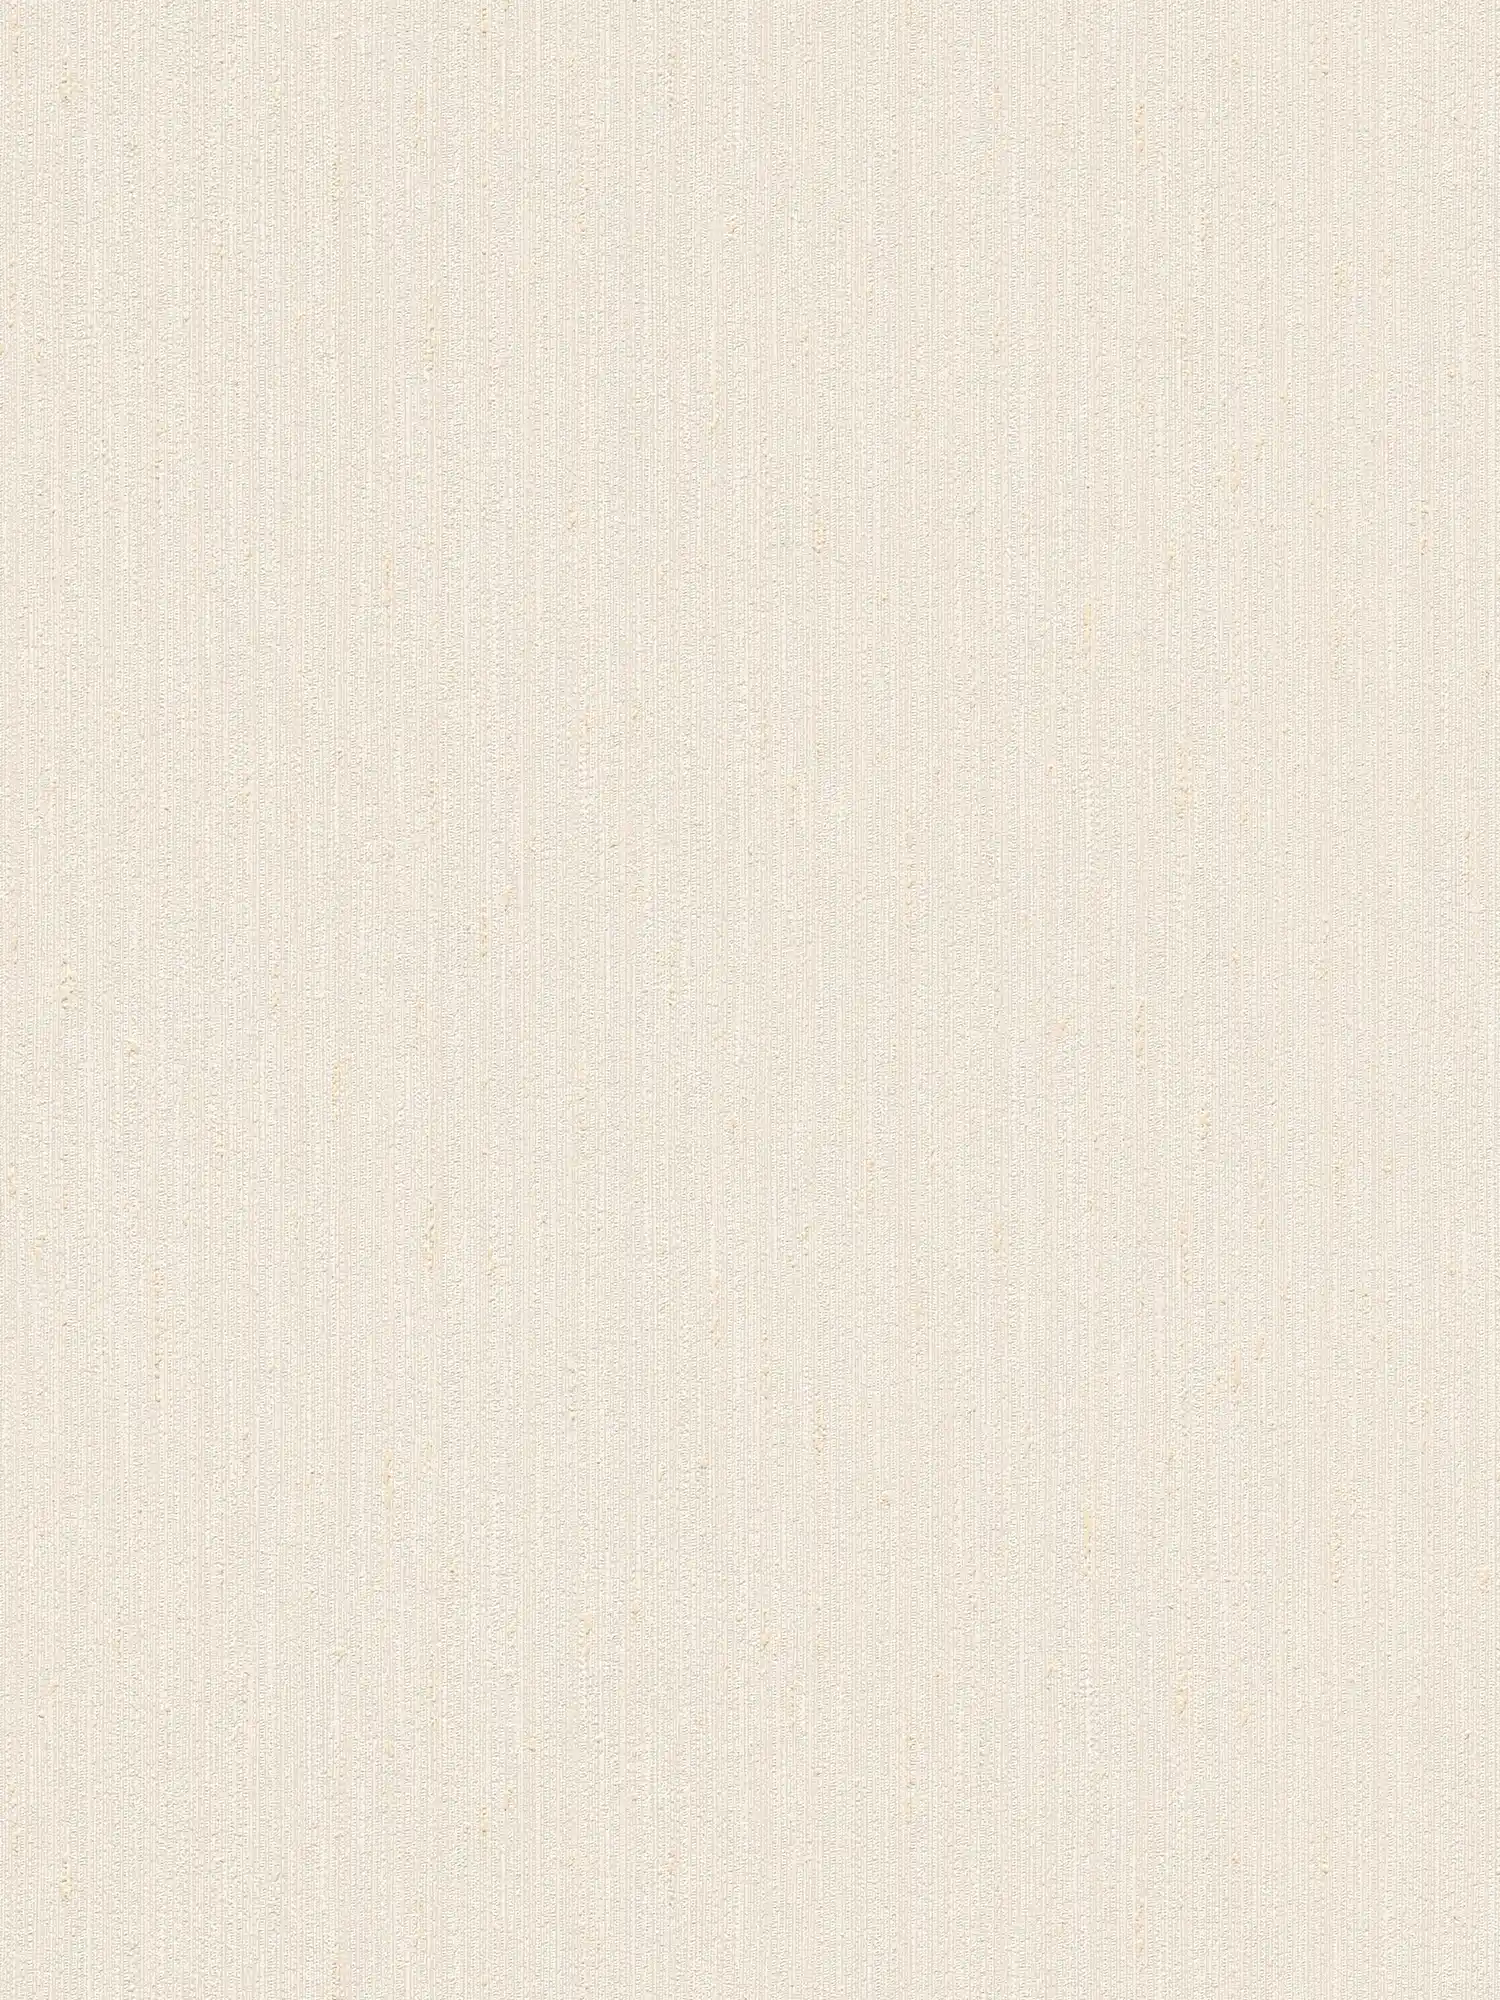 Lightly textured non-woven wallpaper, single-coloured - beige, cream
